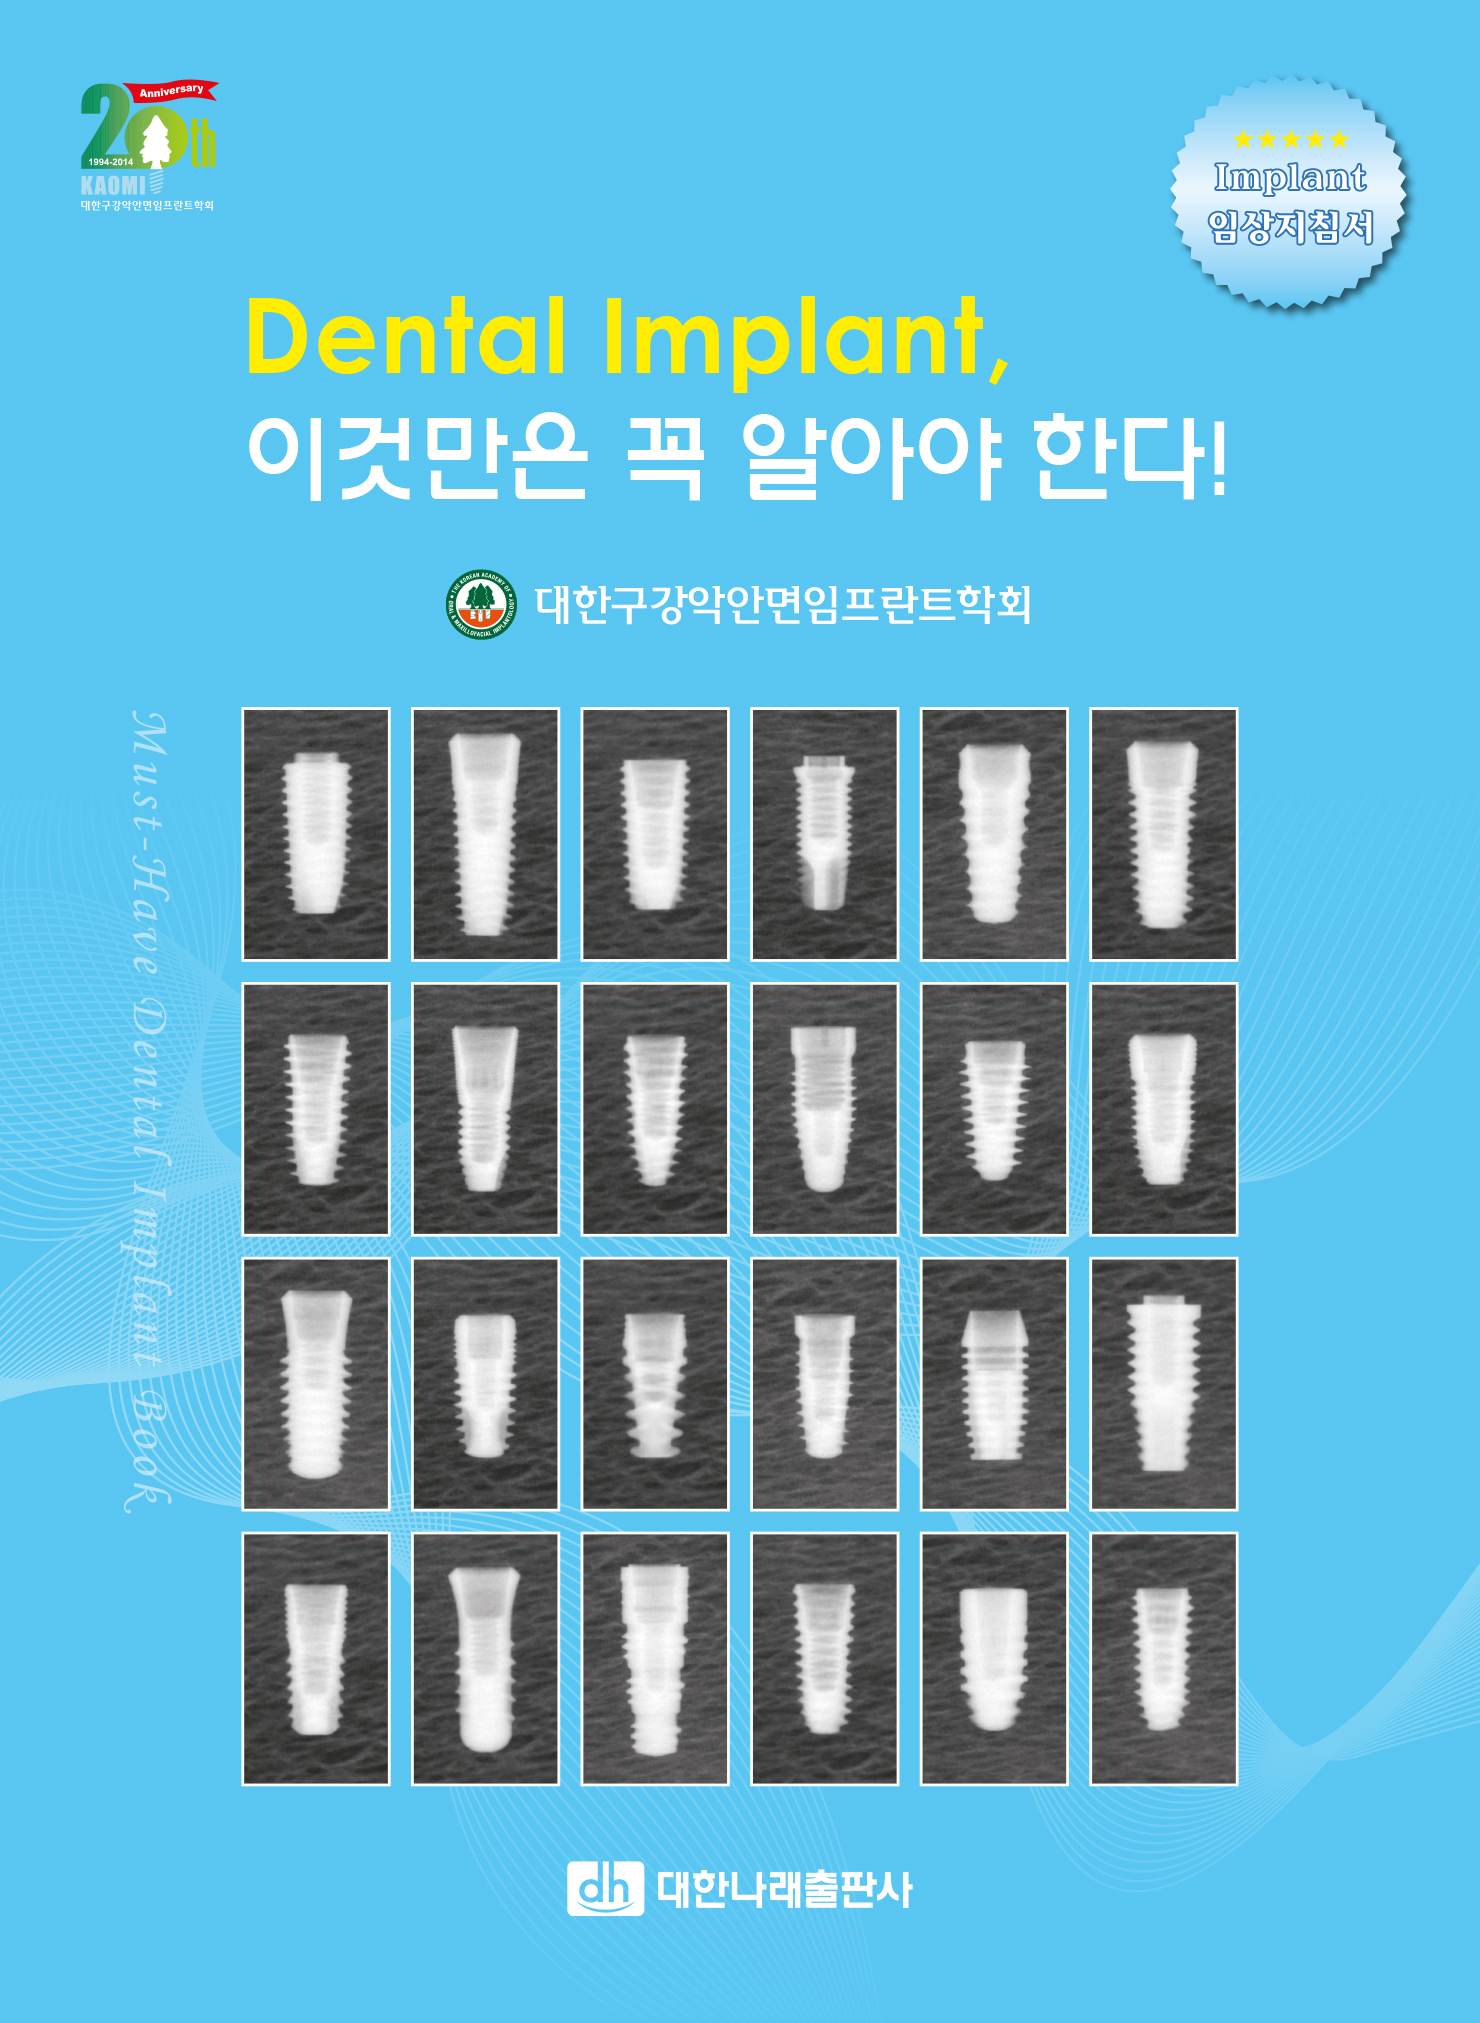 Dental Implant, 이것만은 꼭 알아야 한다!